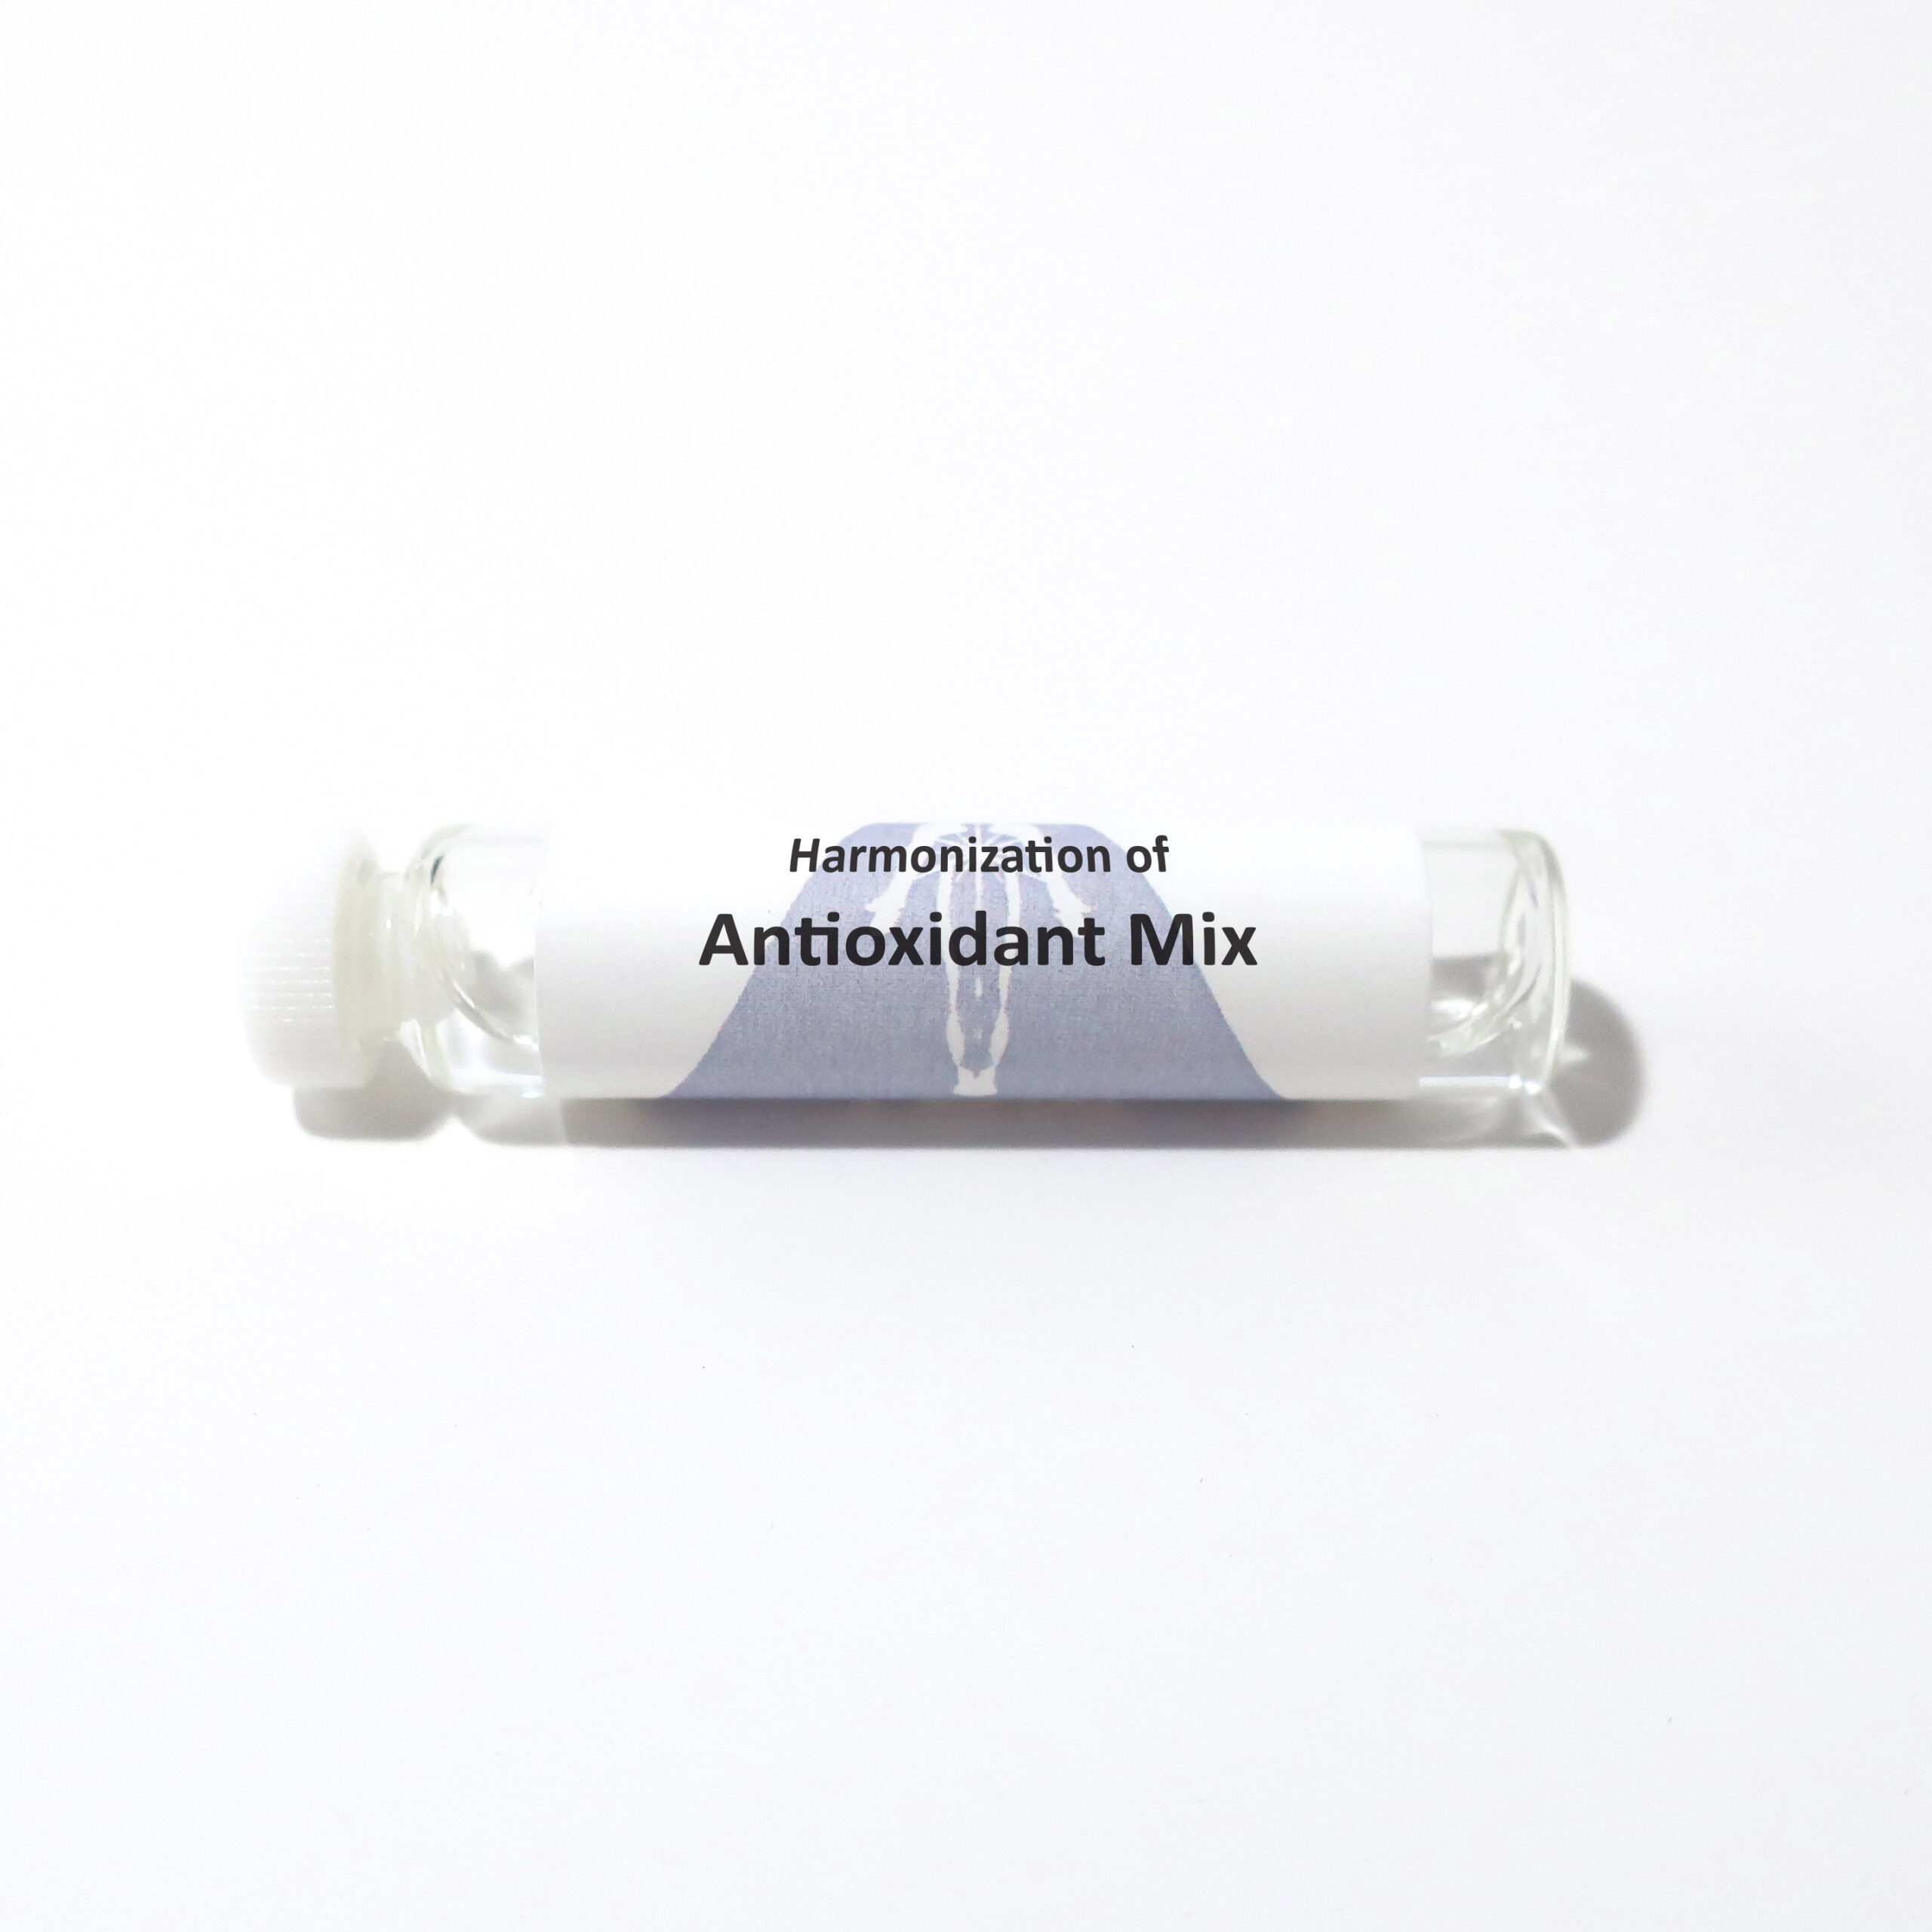 Antioxidant Mix